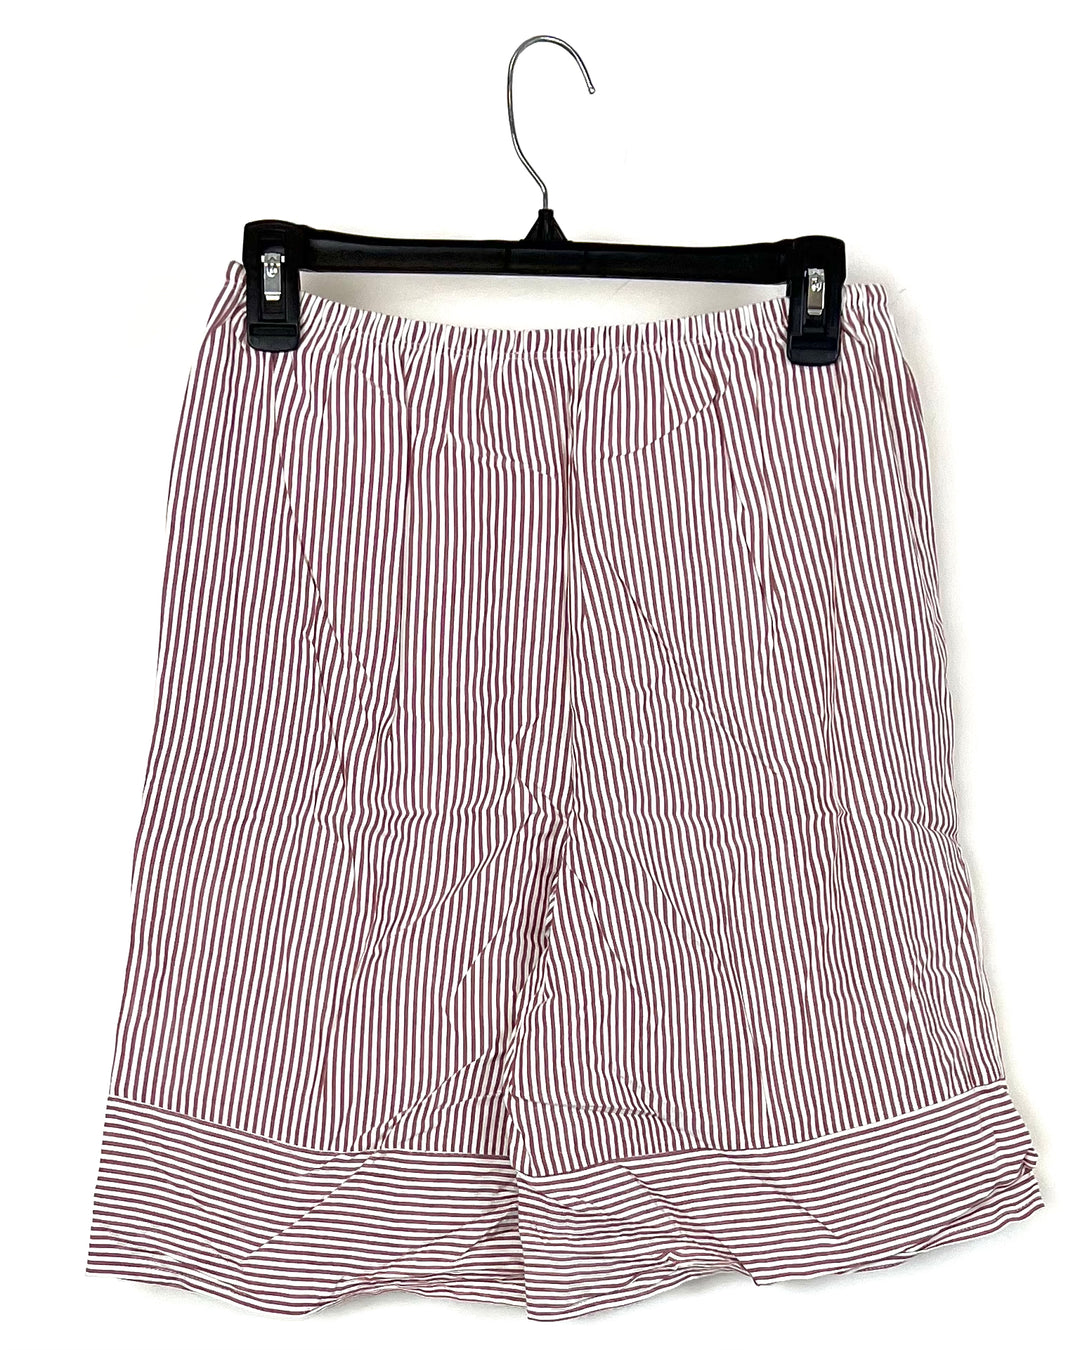 Mauve And White Striped Sleepwear Shorts - Small